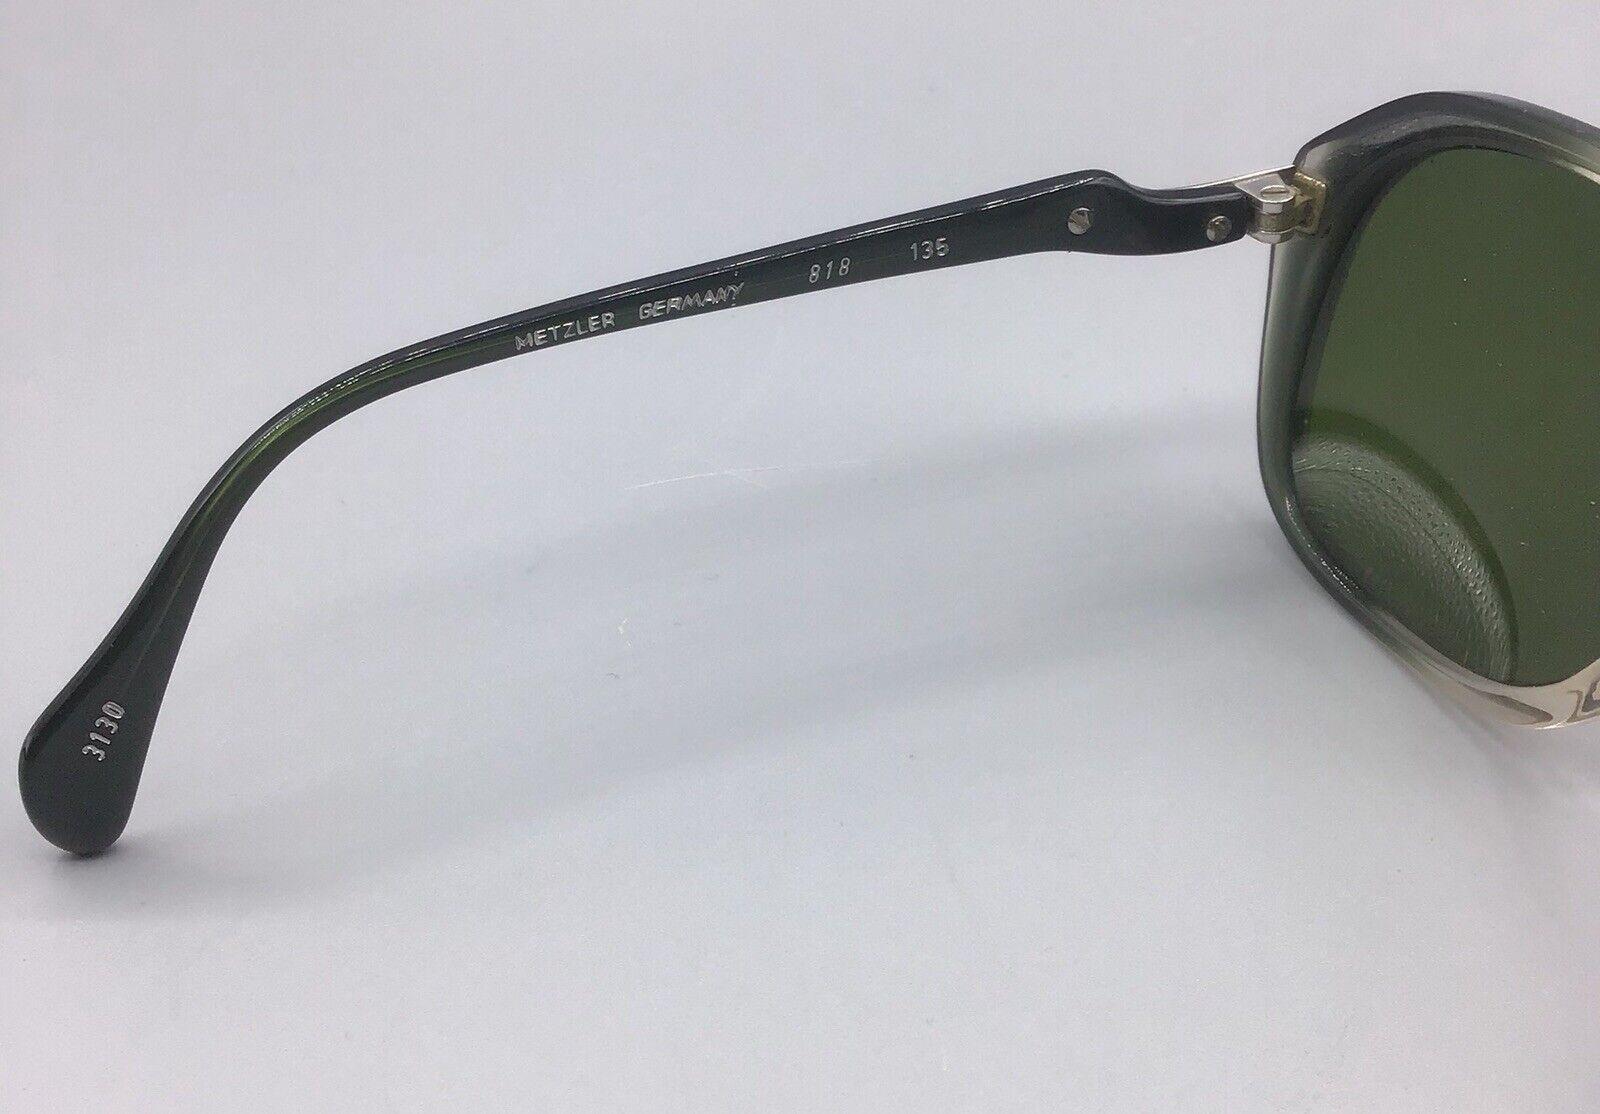 Metzler made in Germany 818 3130 occhiale da sole vintage sonnenbrillen sunglasses